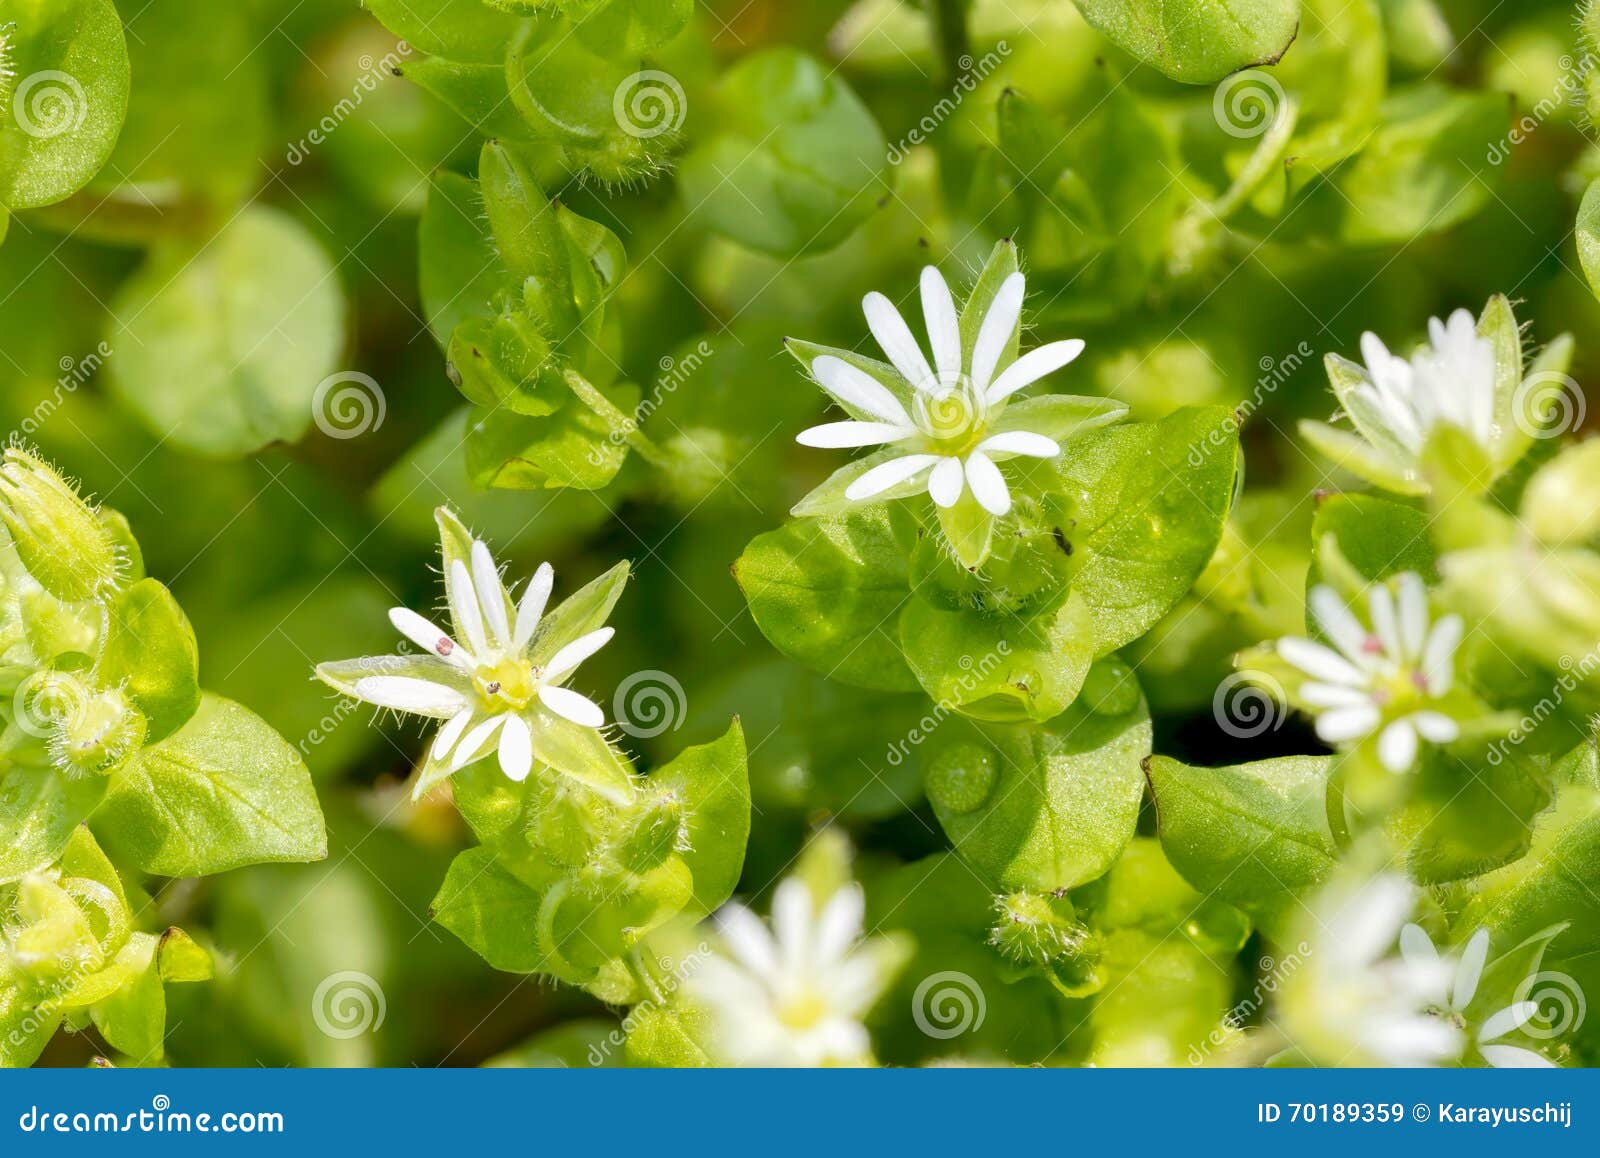 white stellaria media flowers